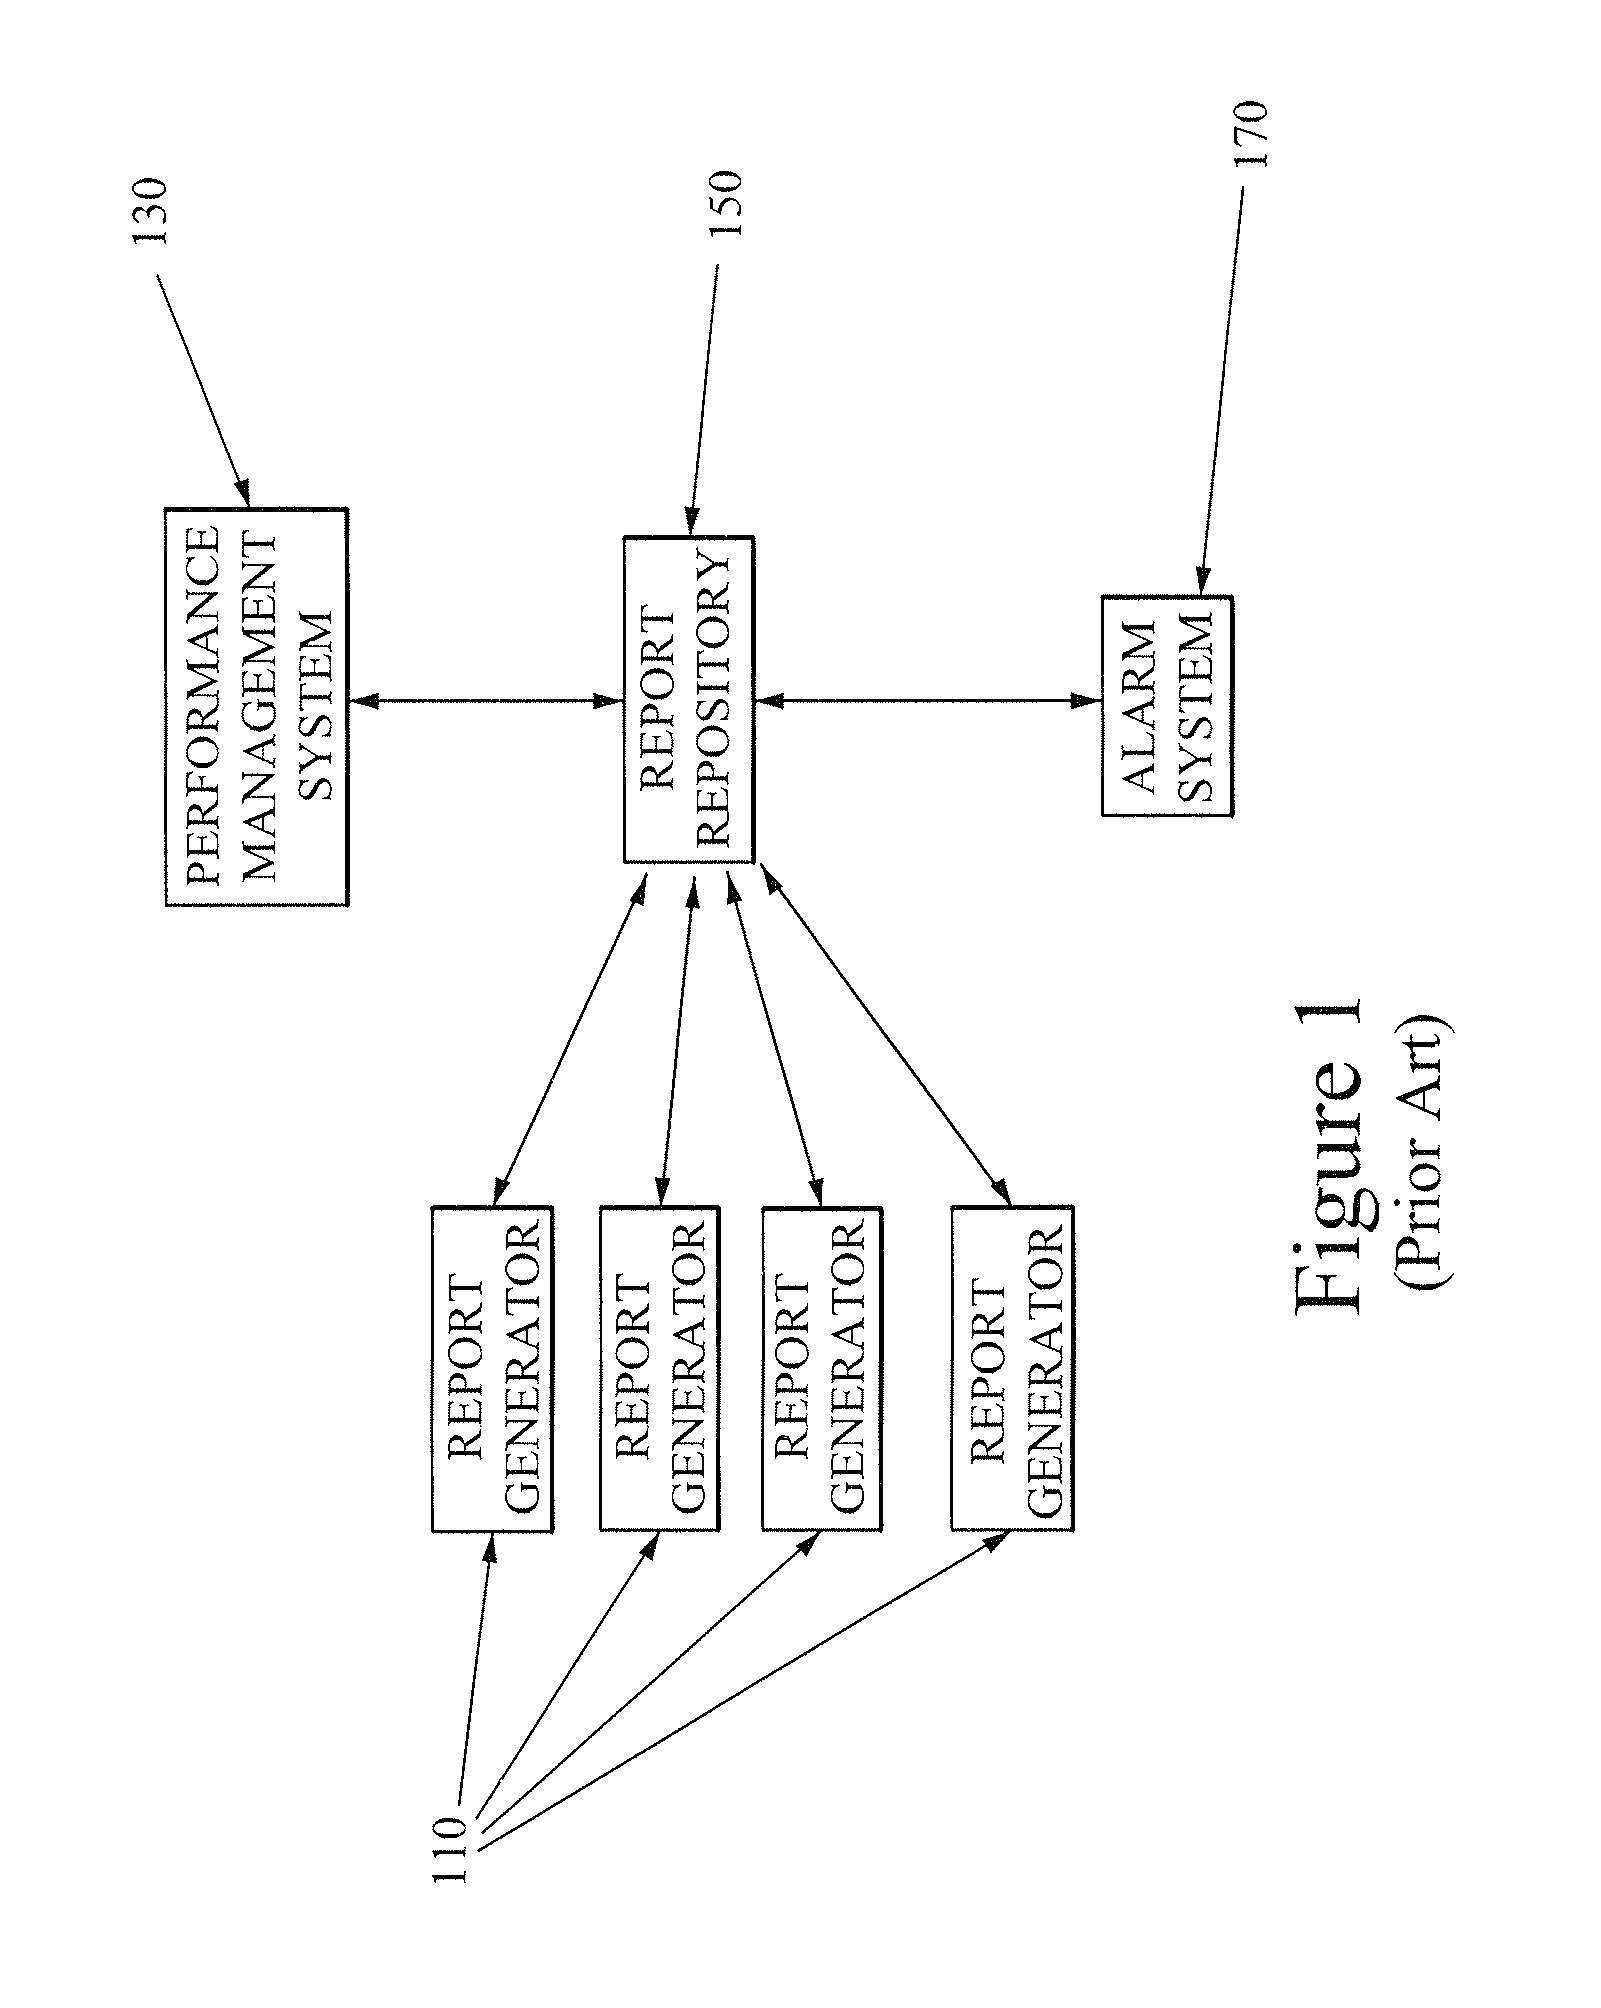 Network analysis system